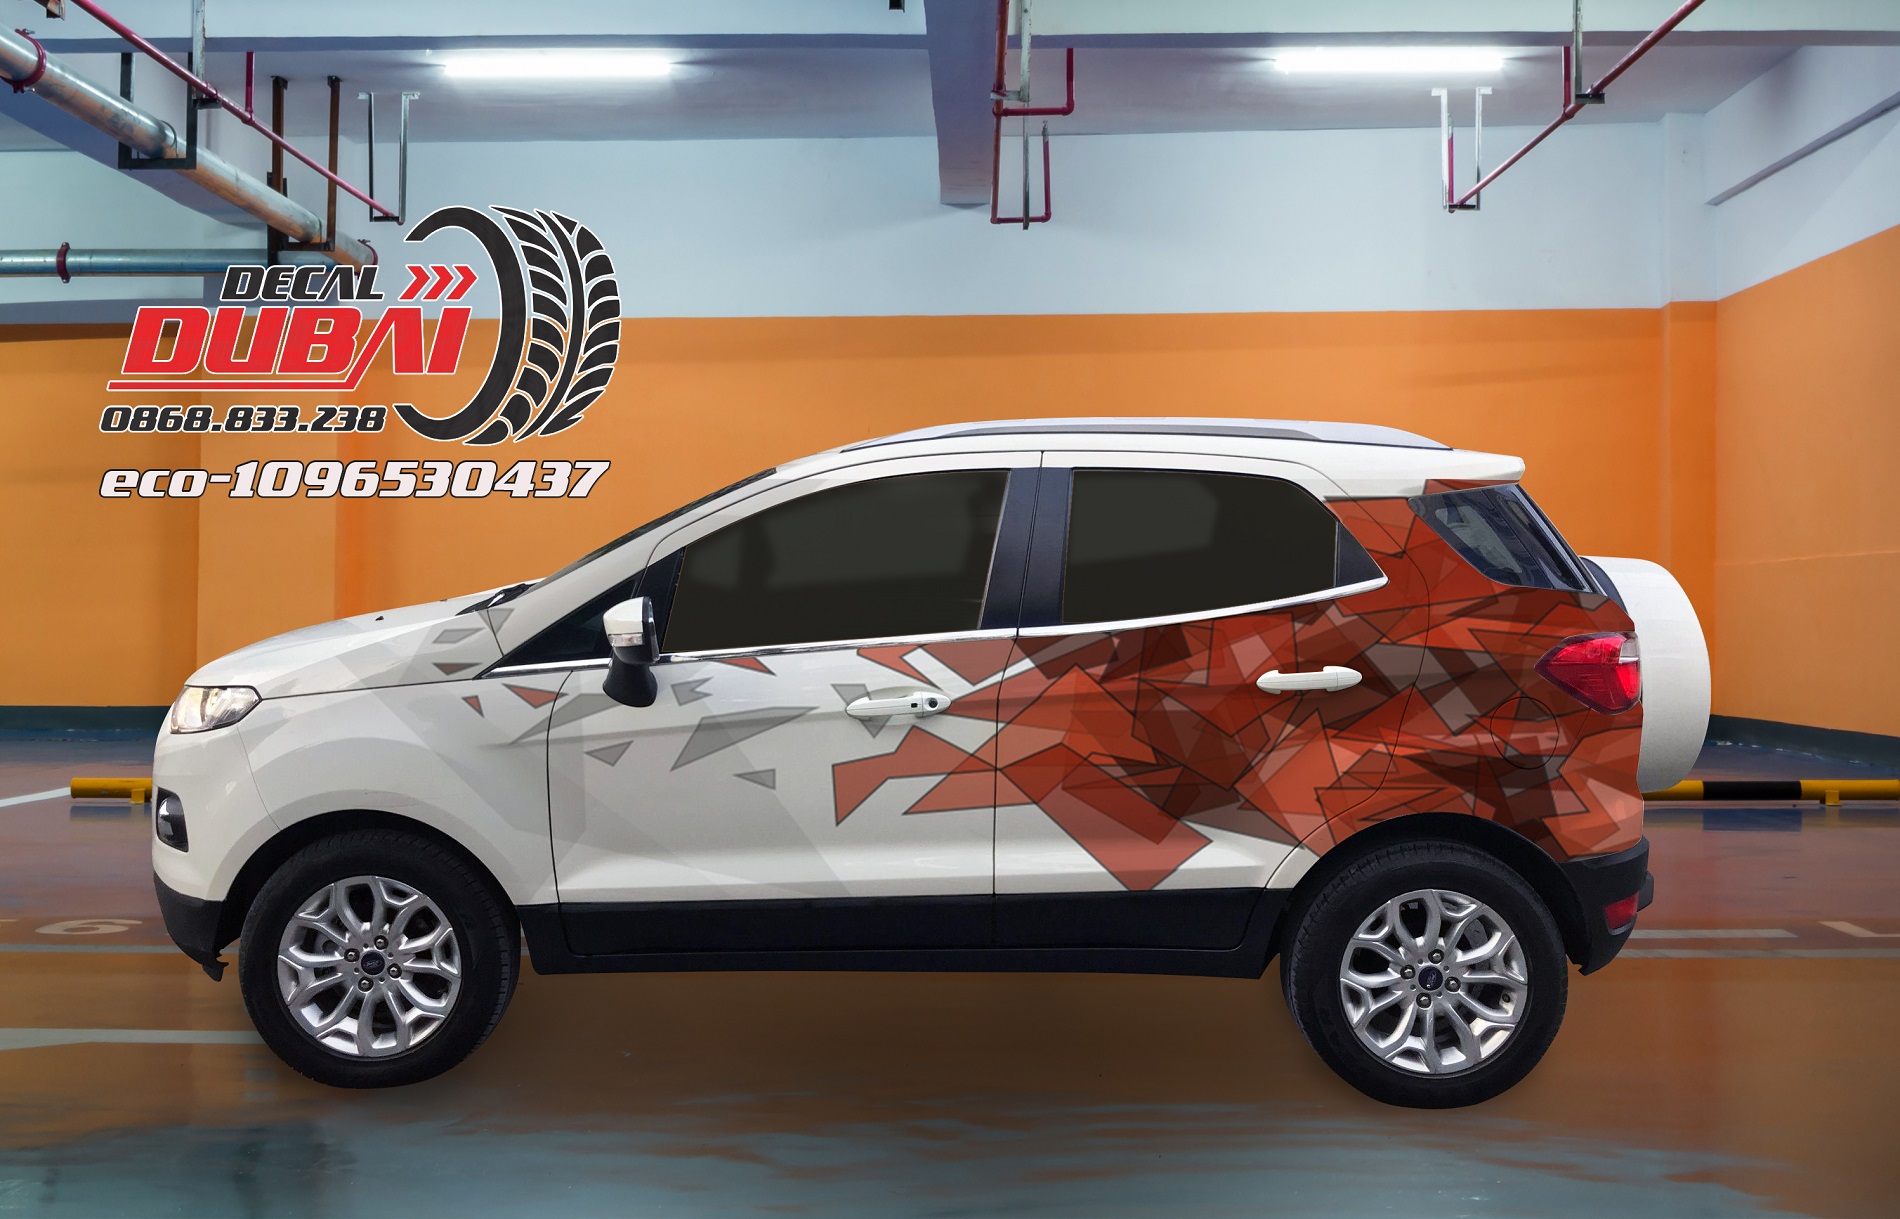 Tem Xe Ford Ecosport Đẹp Hút Hồn Mới Nhất 2020 - Decaldubai